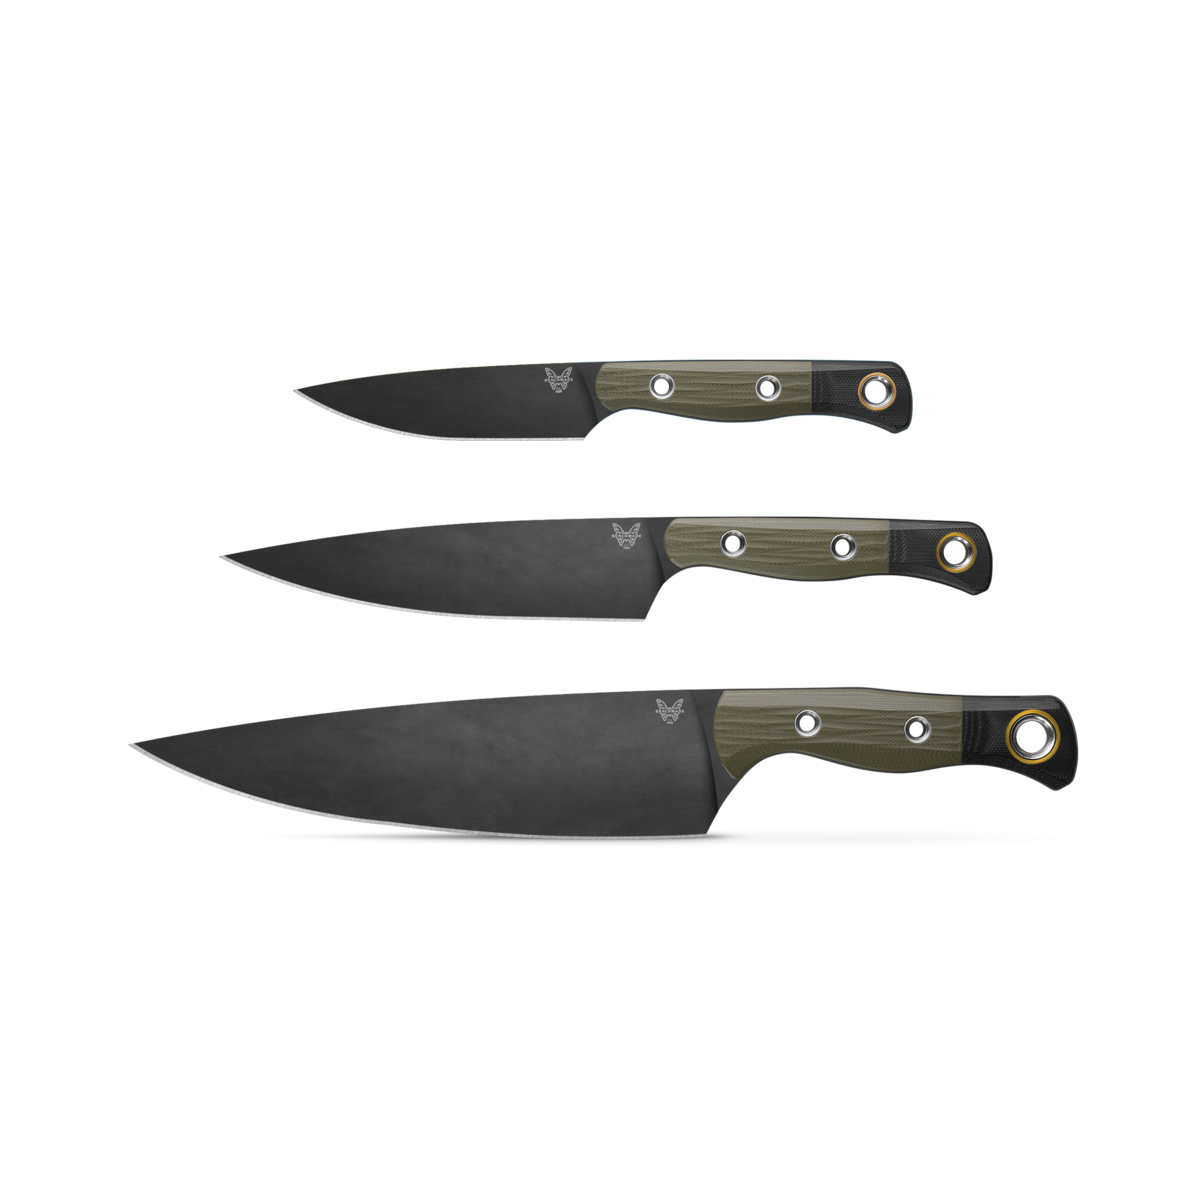 Benchmade 3 Piece Kitchen Knife Set, Black Blades, OD Green G10 Handles  with Black G10 Bolsters - KnifeCenter - 4000BK-01